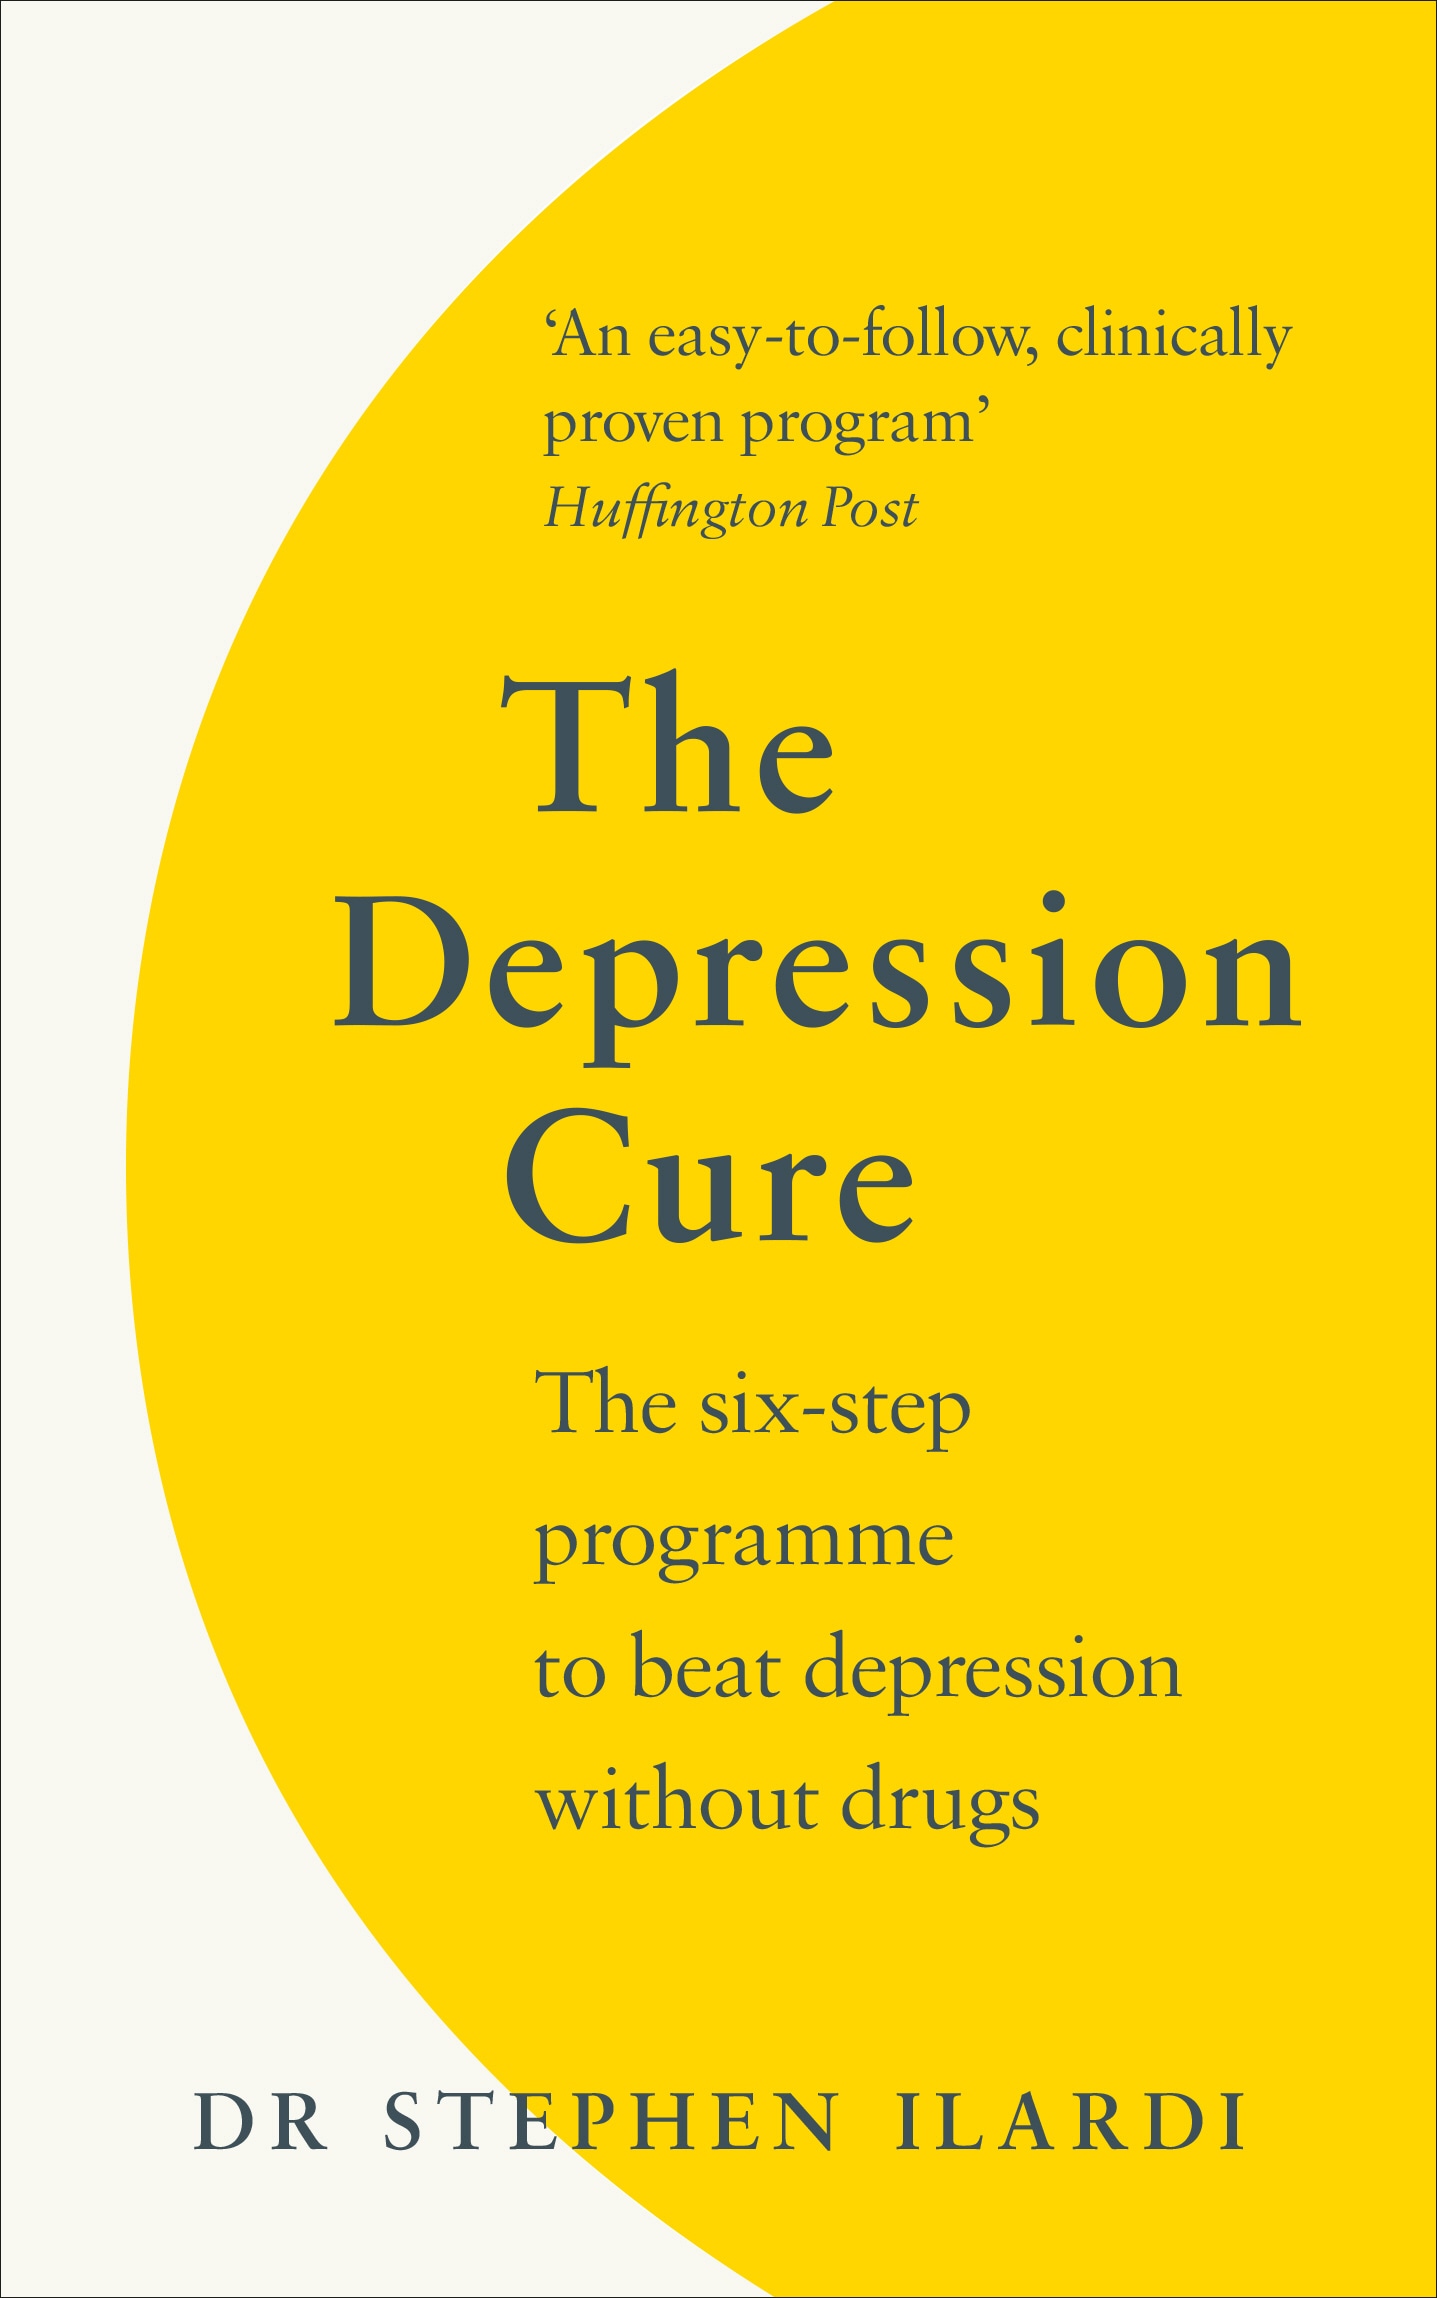 Book “The Depression Cure” by Steve Ilardi — October 3, 2019